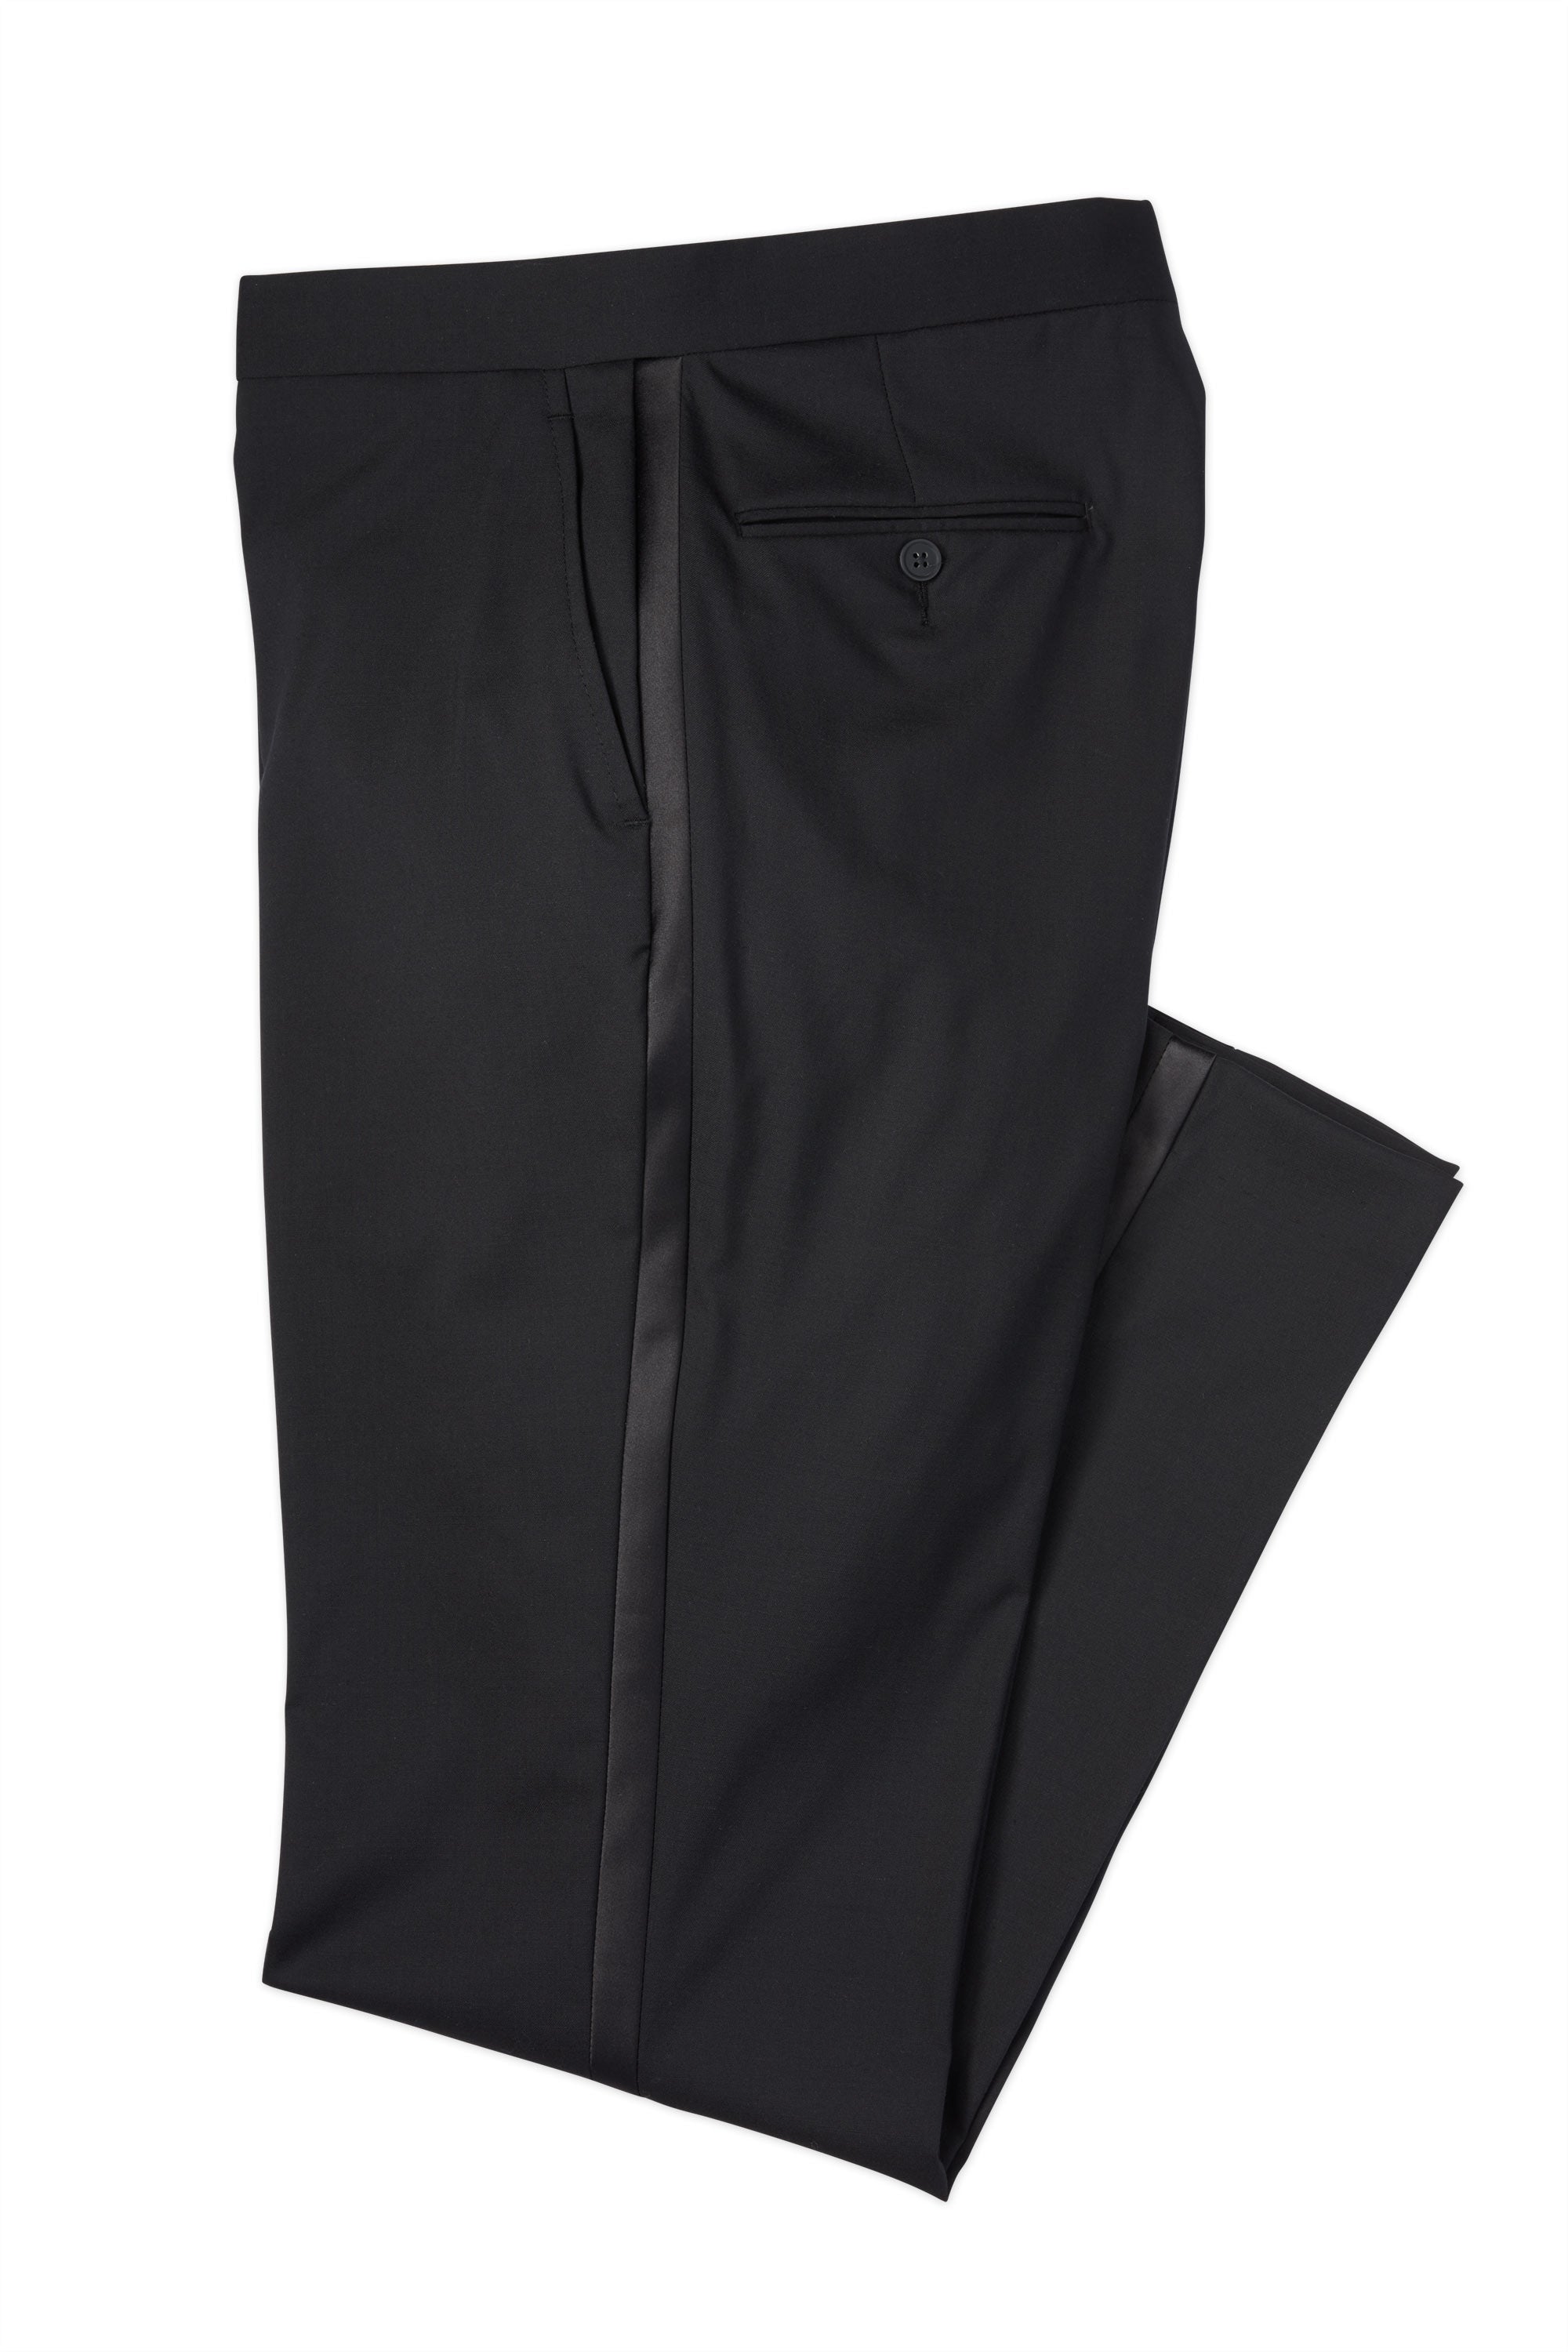 Men's Flat Front Tuxedo Pant Modern Cut - BLACK 98/2 WOOL/LYCRA SUPER100